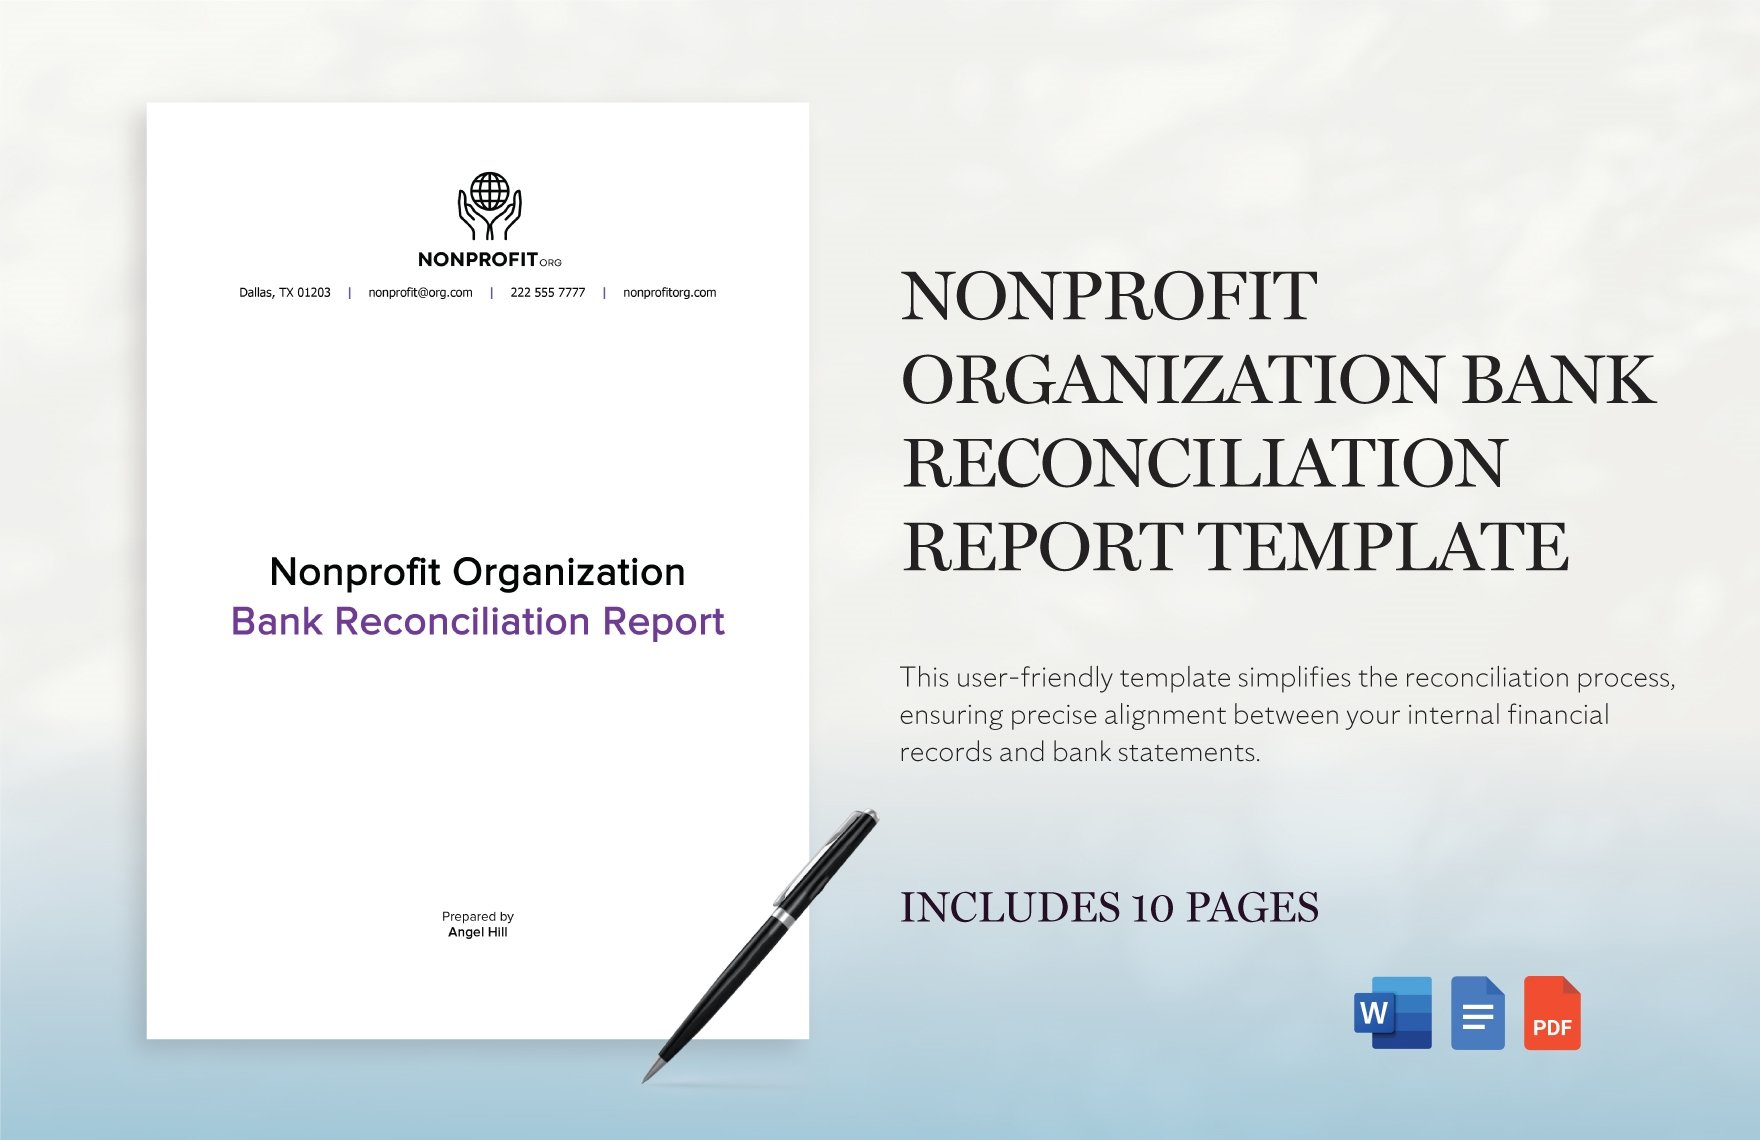 Nonprofit Organization Bank Reconciliation Report Template in Word, Google Docs, PDF